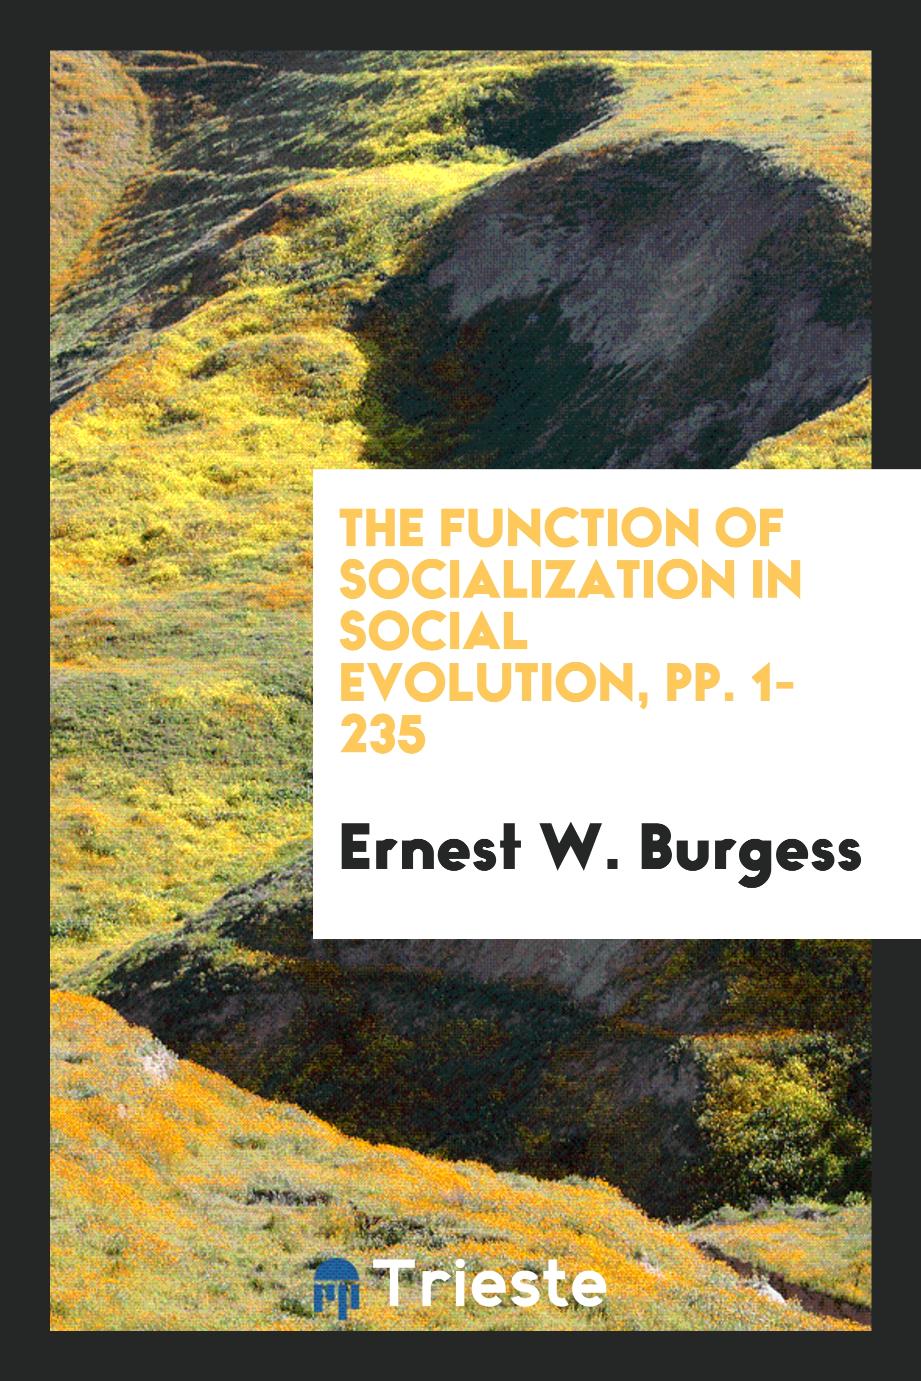 The Function of Socialization in Social Evolution, pp. 1-235